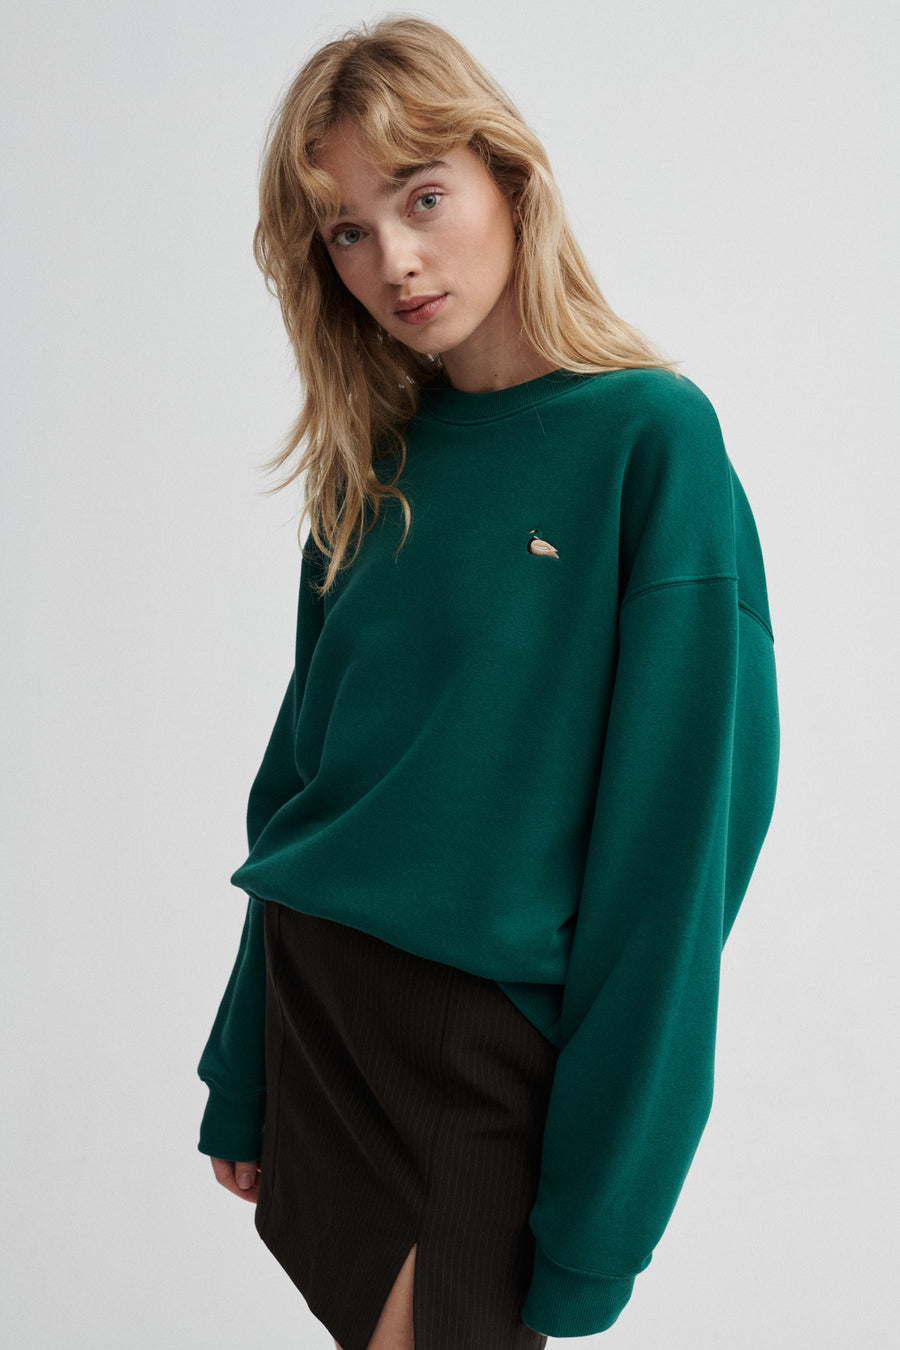 Sweatshirt in organic cotton / 17 / 16 / vintage green / duck